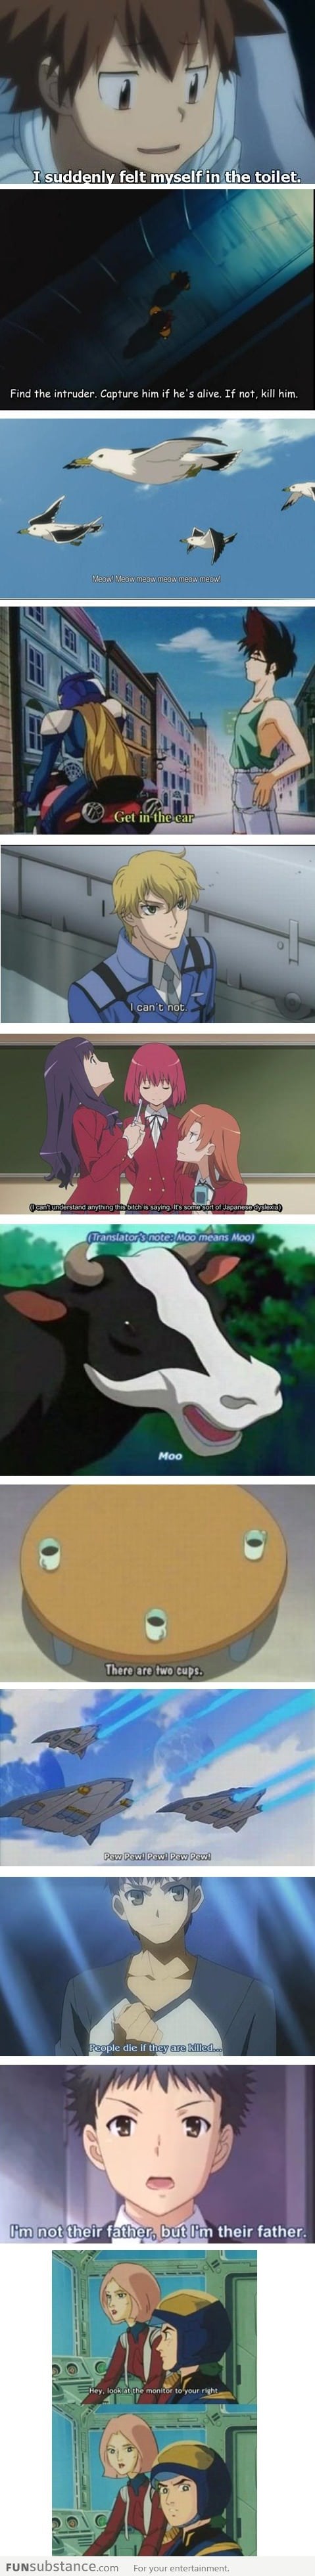 Best of Anime Subtitles